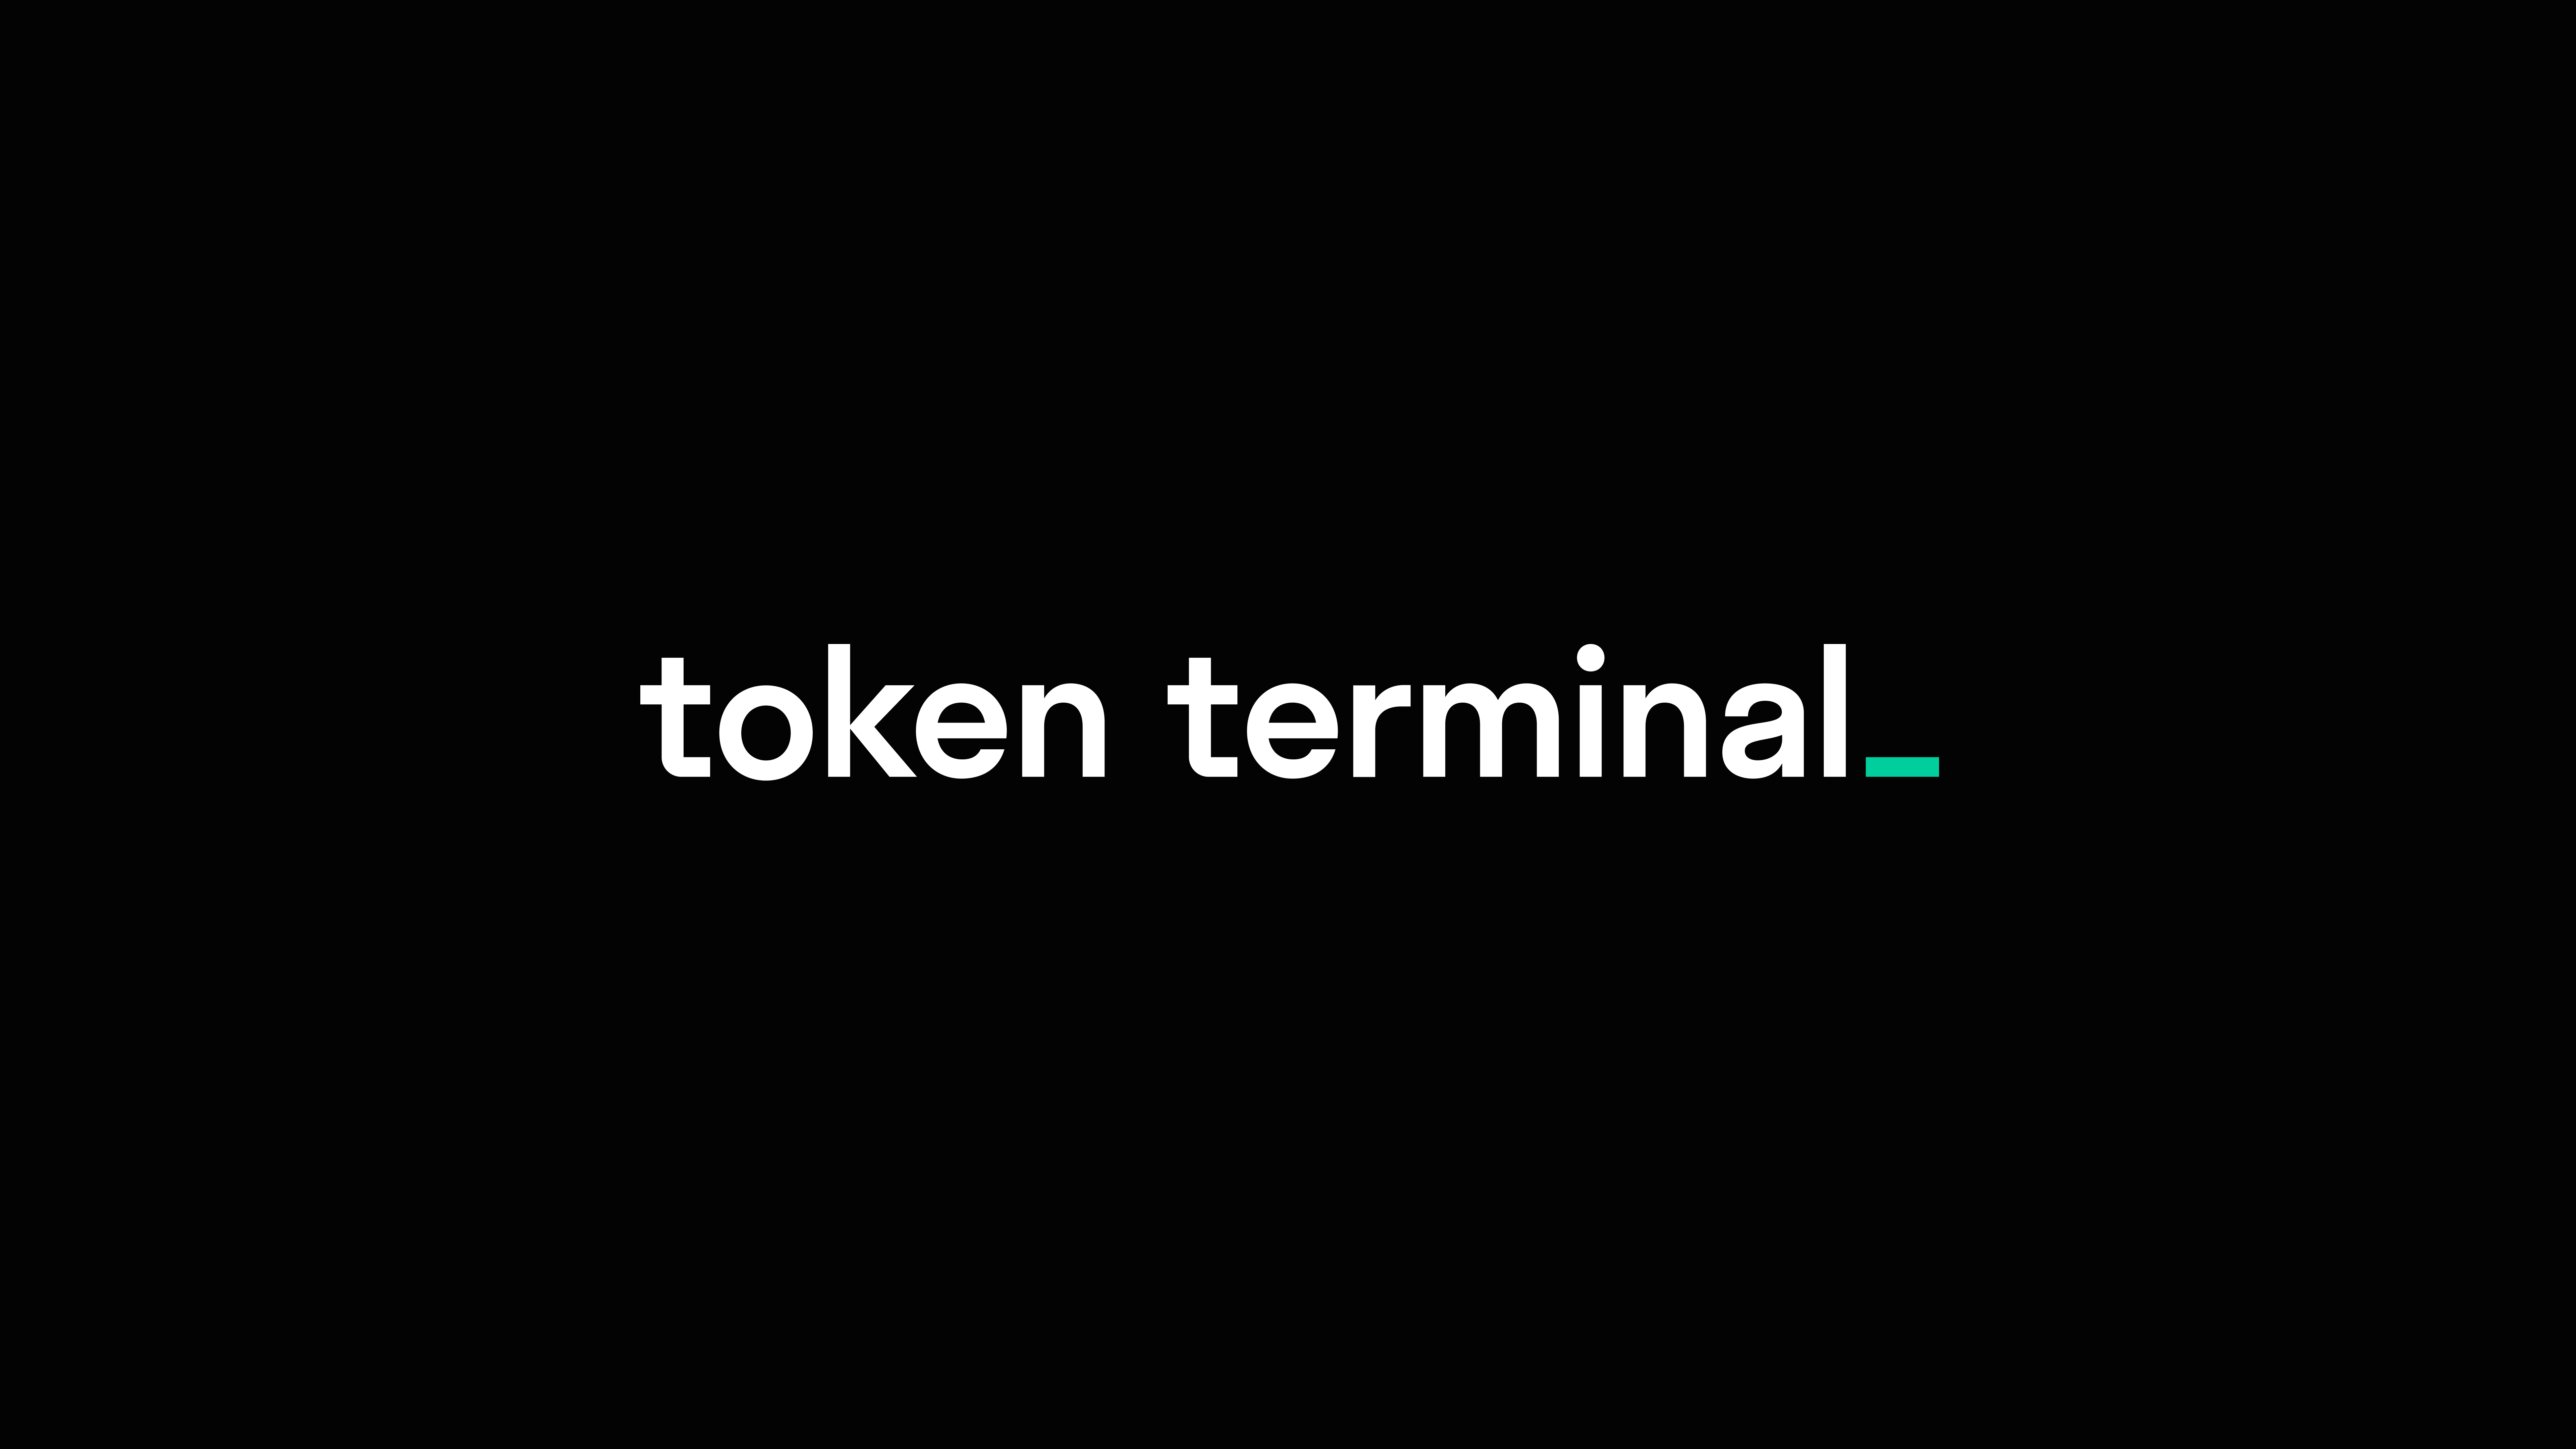 Ready go to ... https://www.tokenterminal.com/home [ Token Terminal | Fundamentals for crypto]